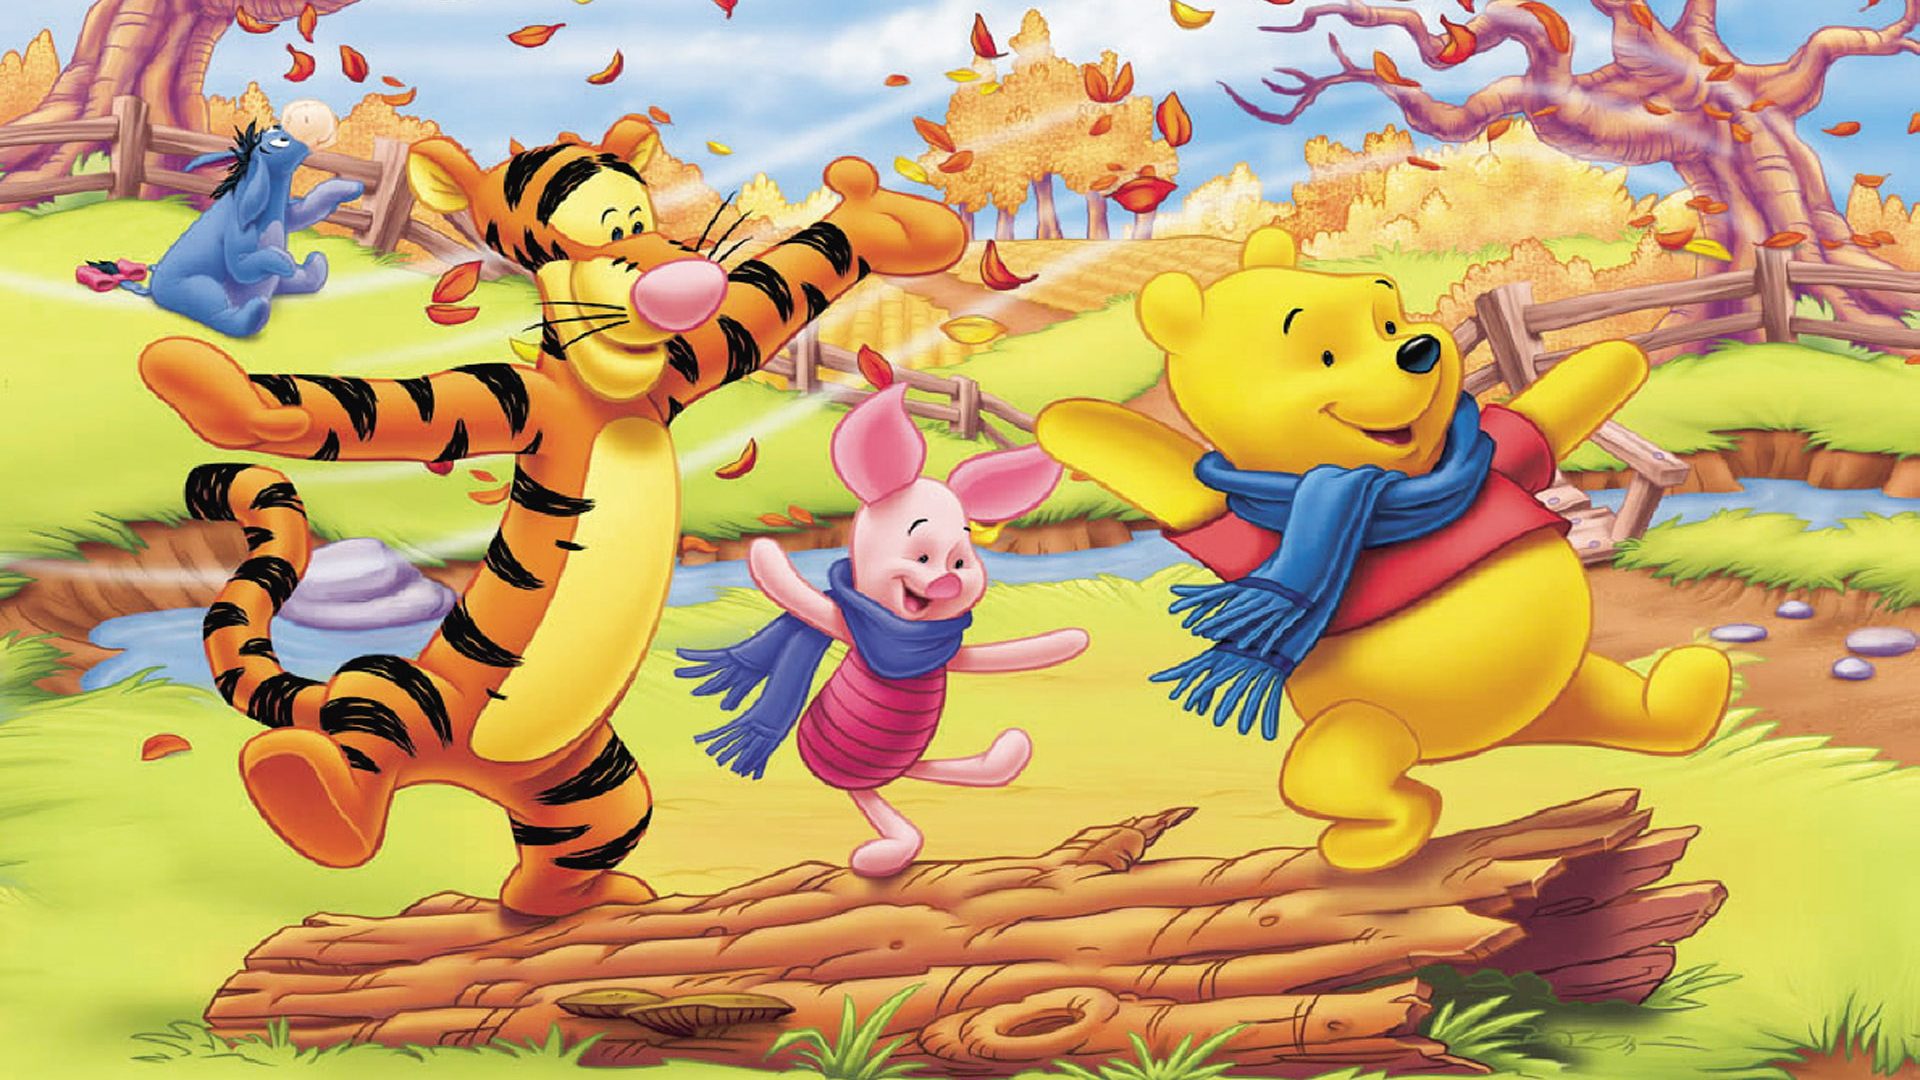 Winnie The Pooh And Friends Autumn Picture Cartoon HD Wallpaper For Deskx1200, Wallpaper13.com